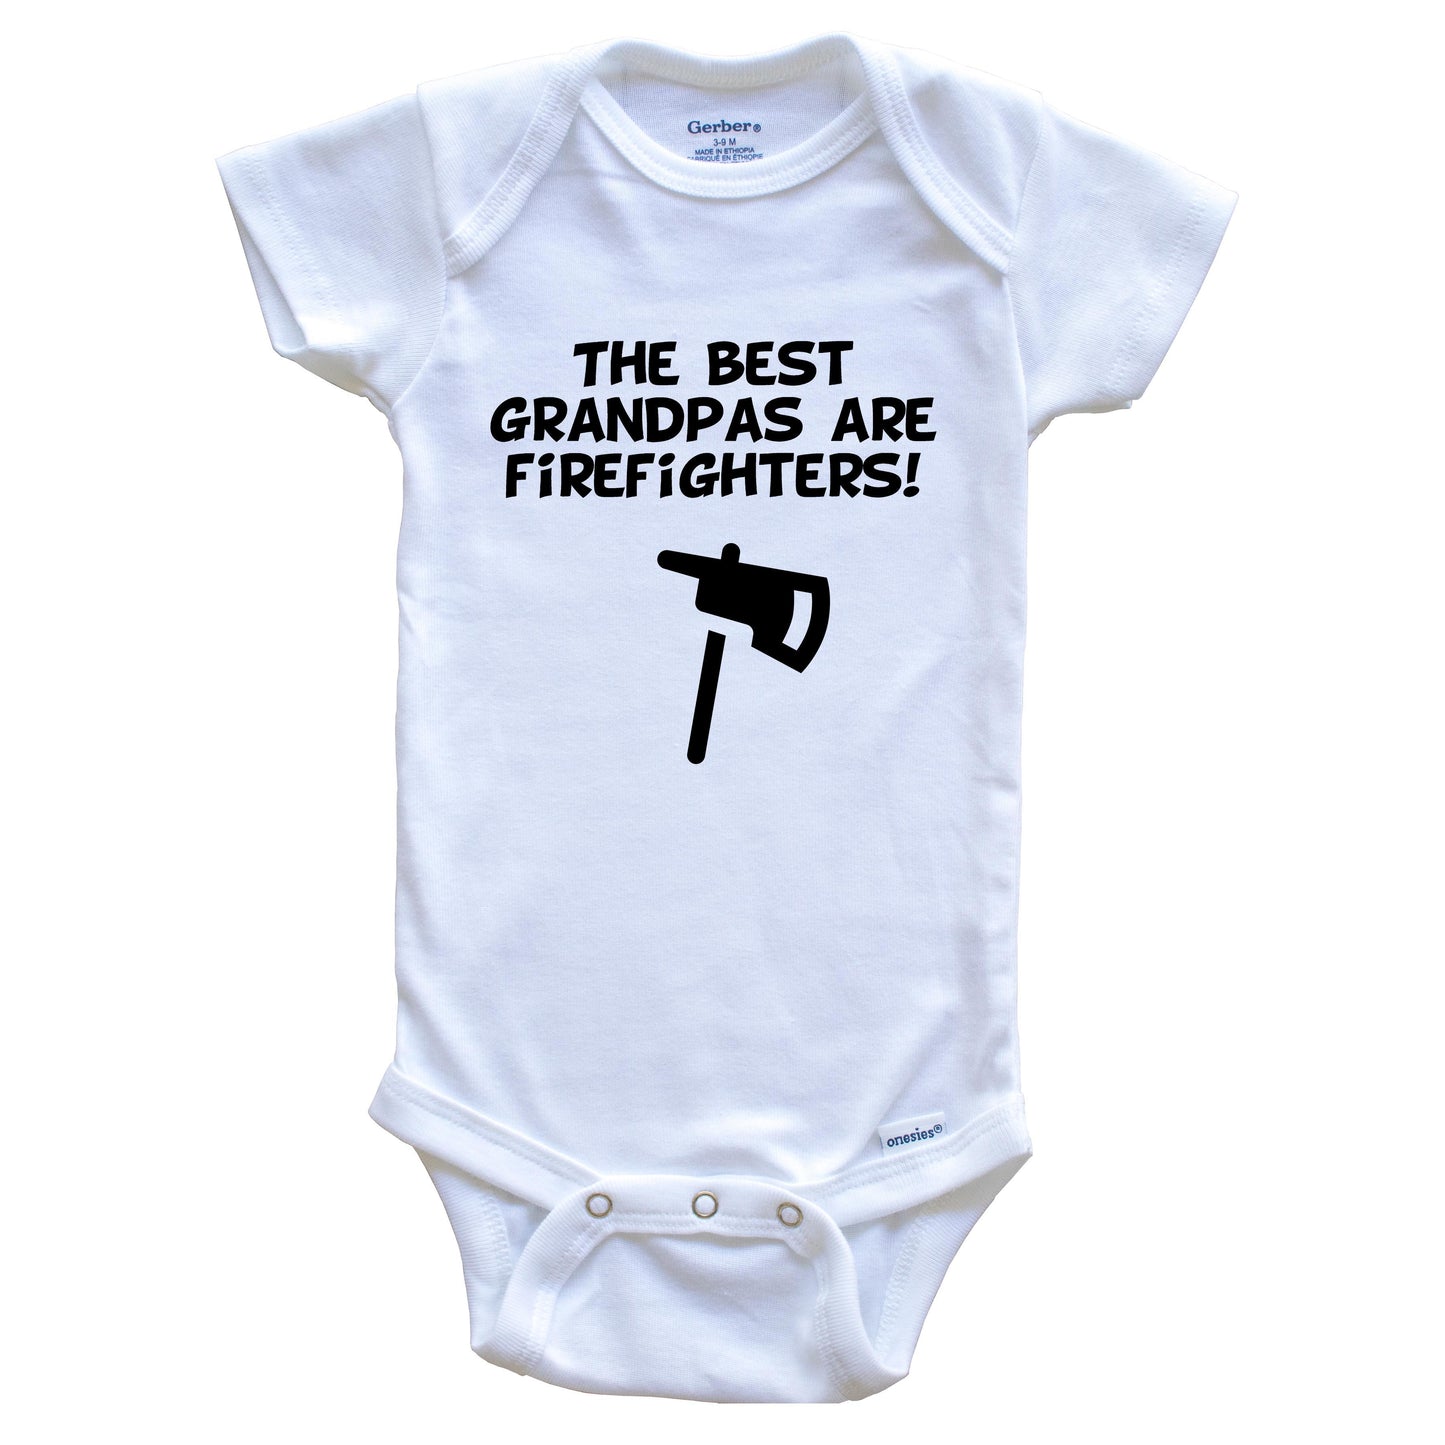 The Best Grandpas Are Firefighters Funny Grandchild Baby Onesie